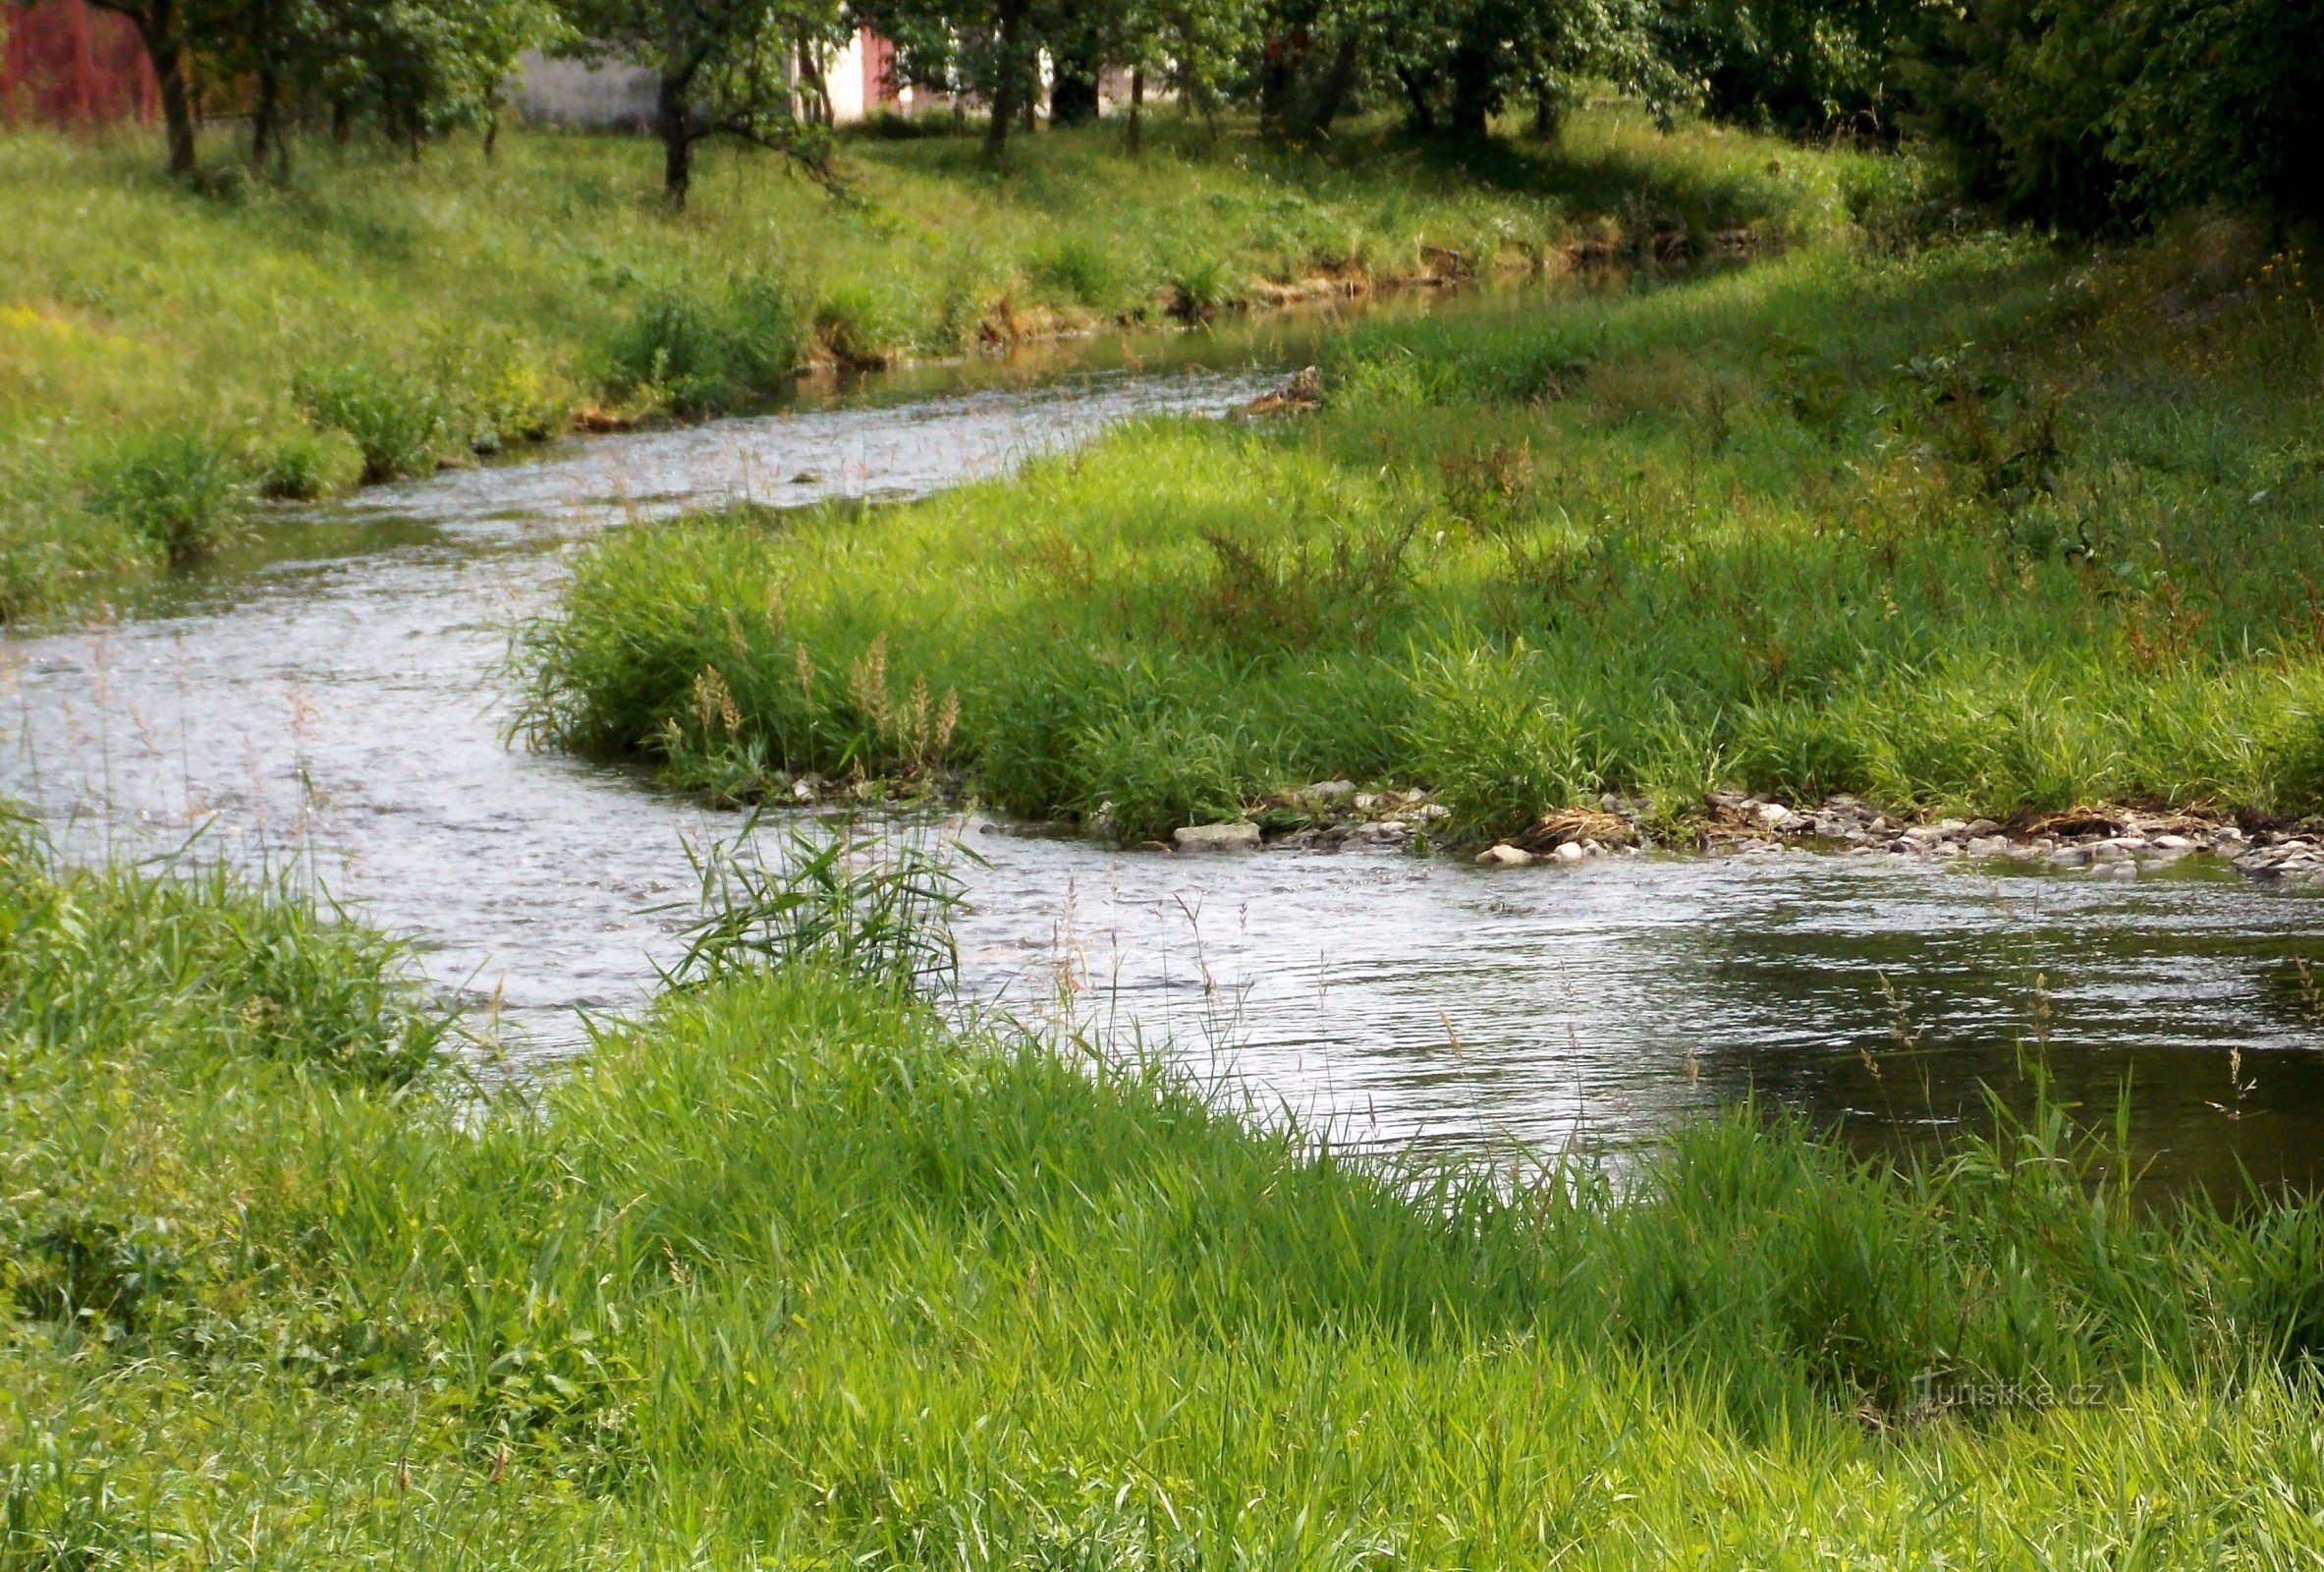 Brumovka rivierdal in Brumov - Bylnice